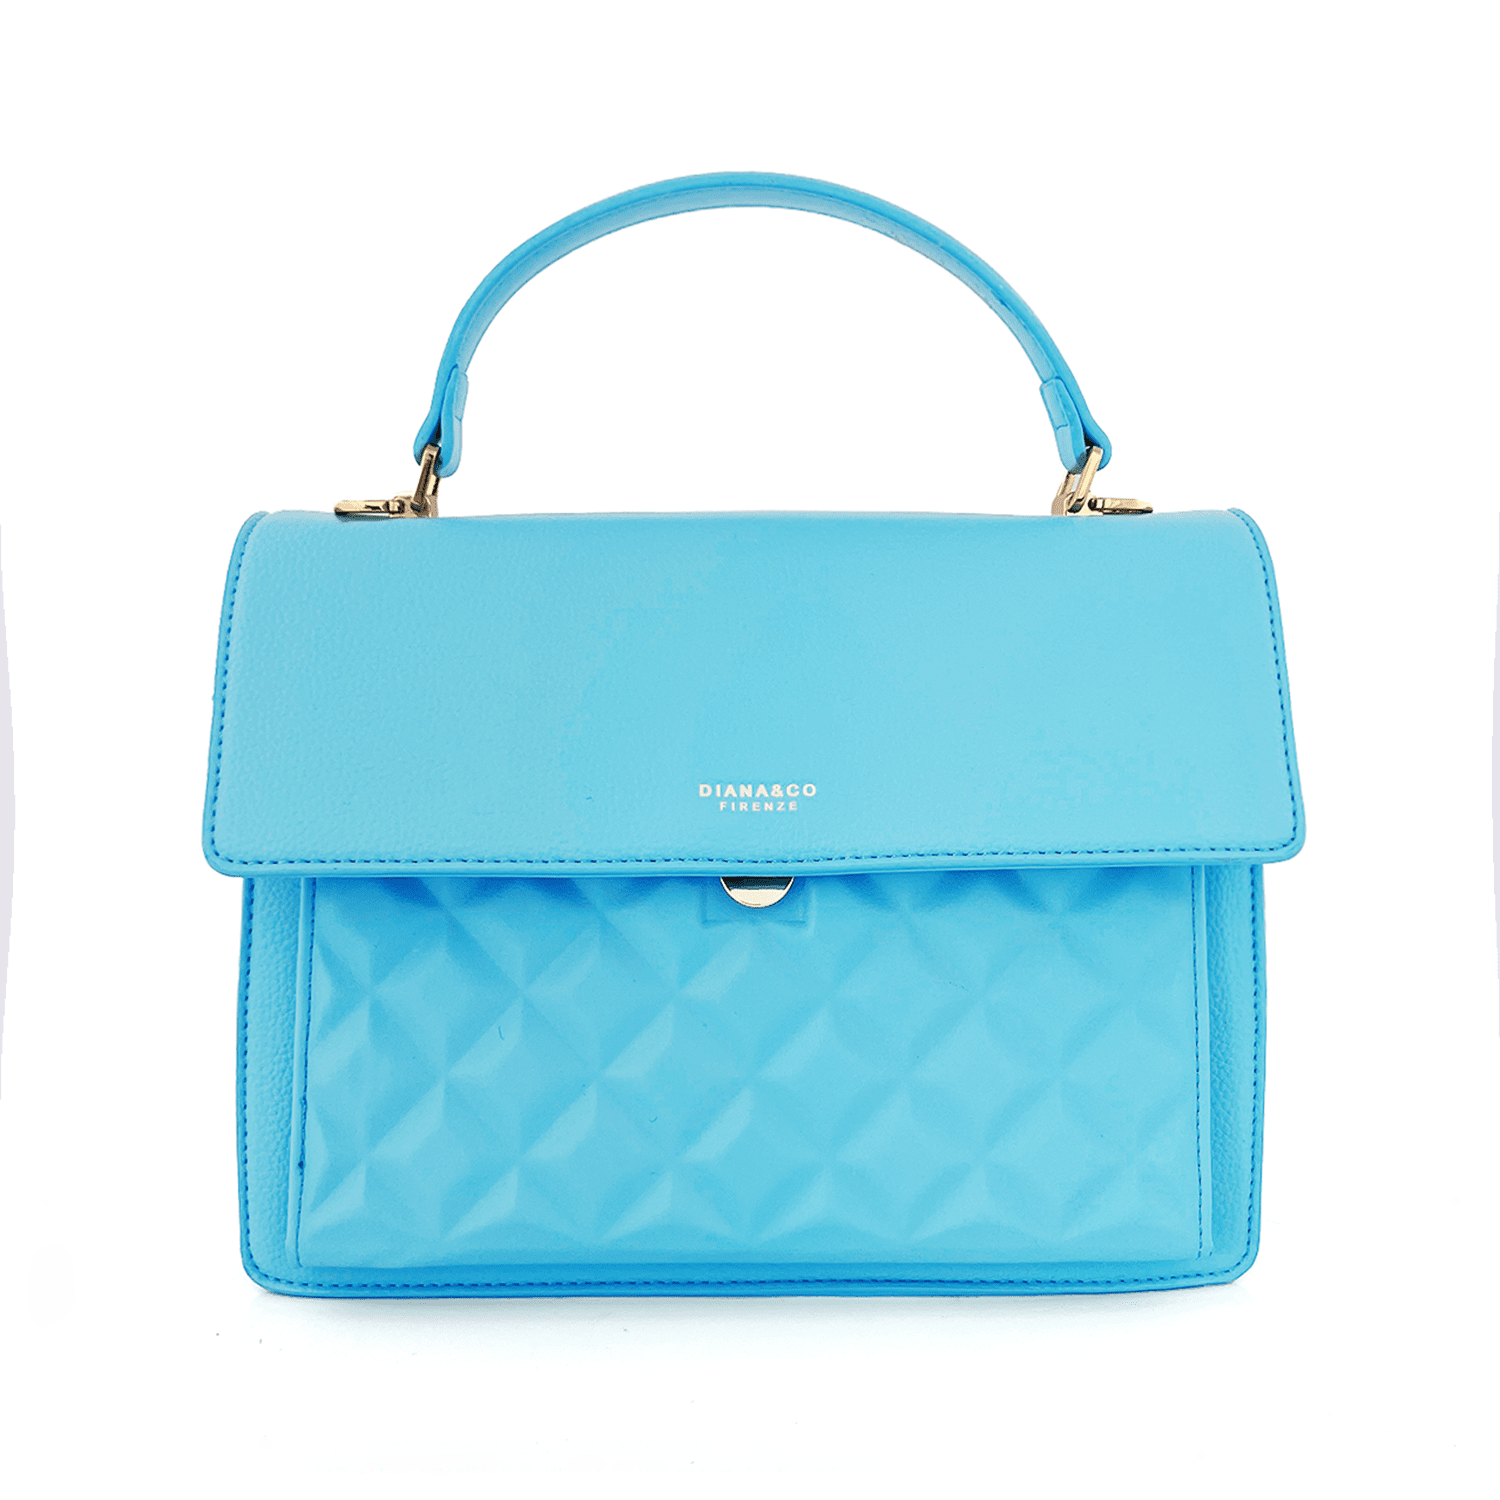 Diana & Co - Луксозна дамска чанта - светло синя 